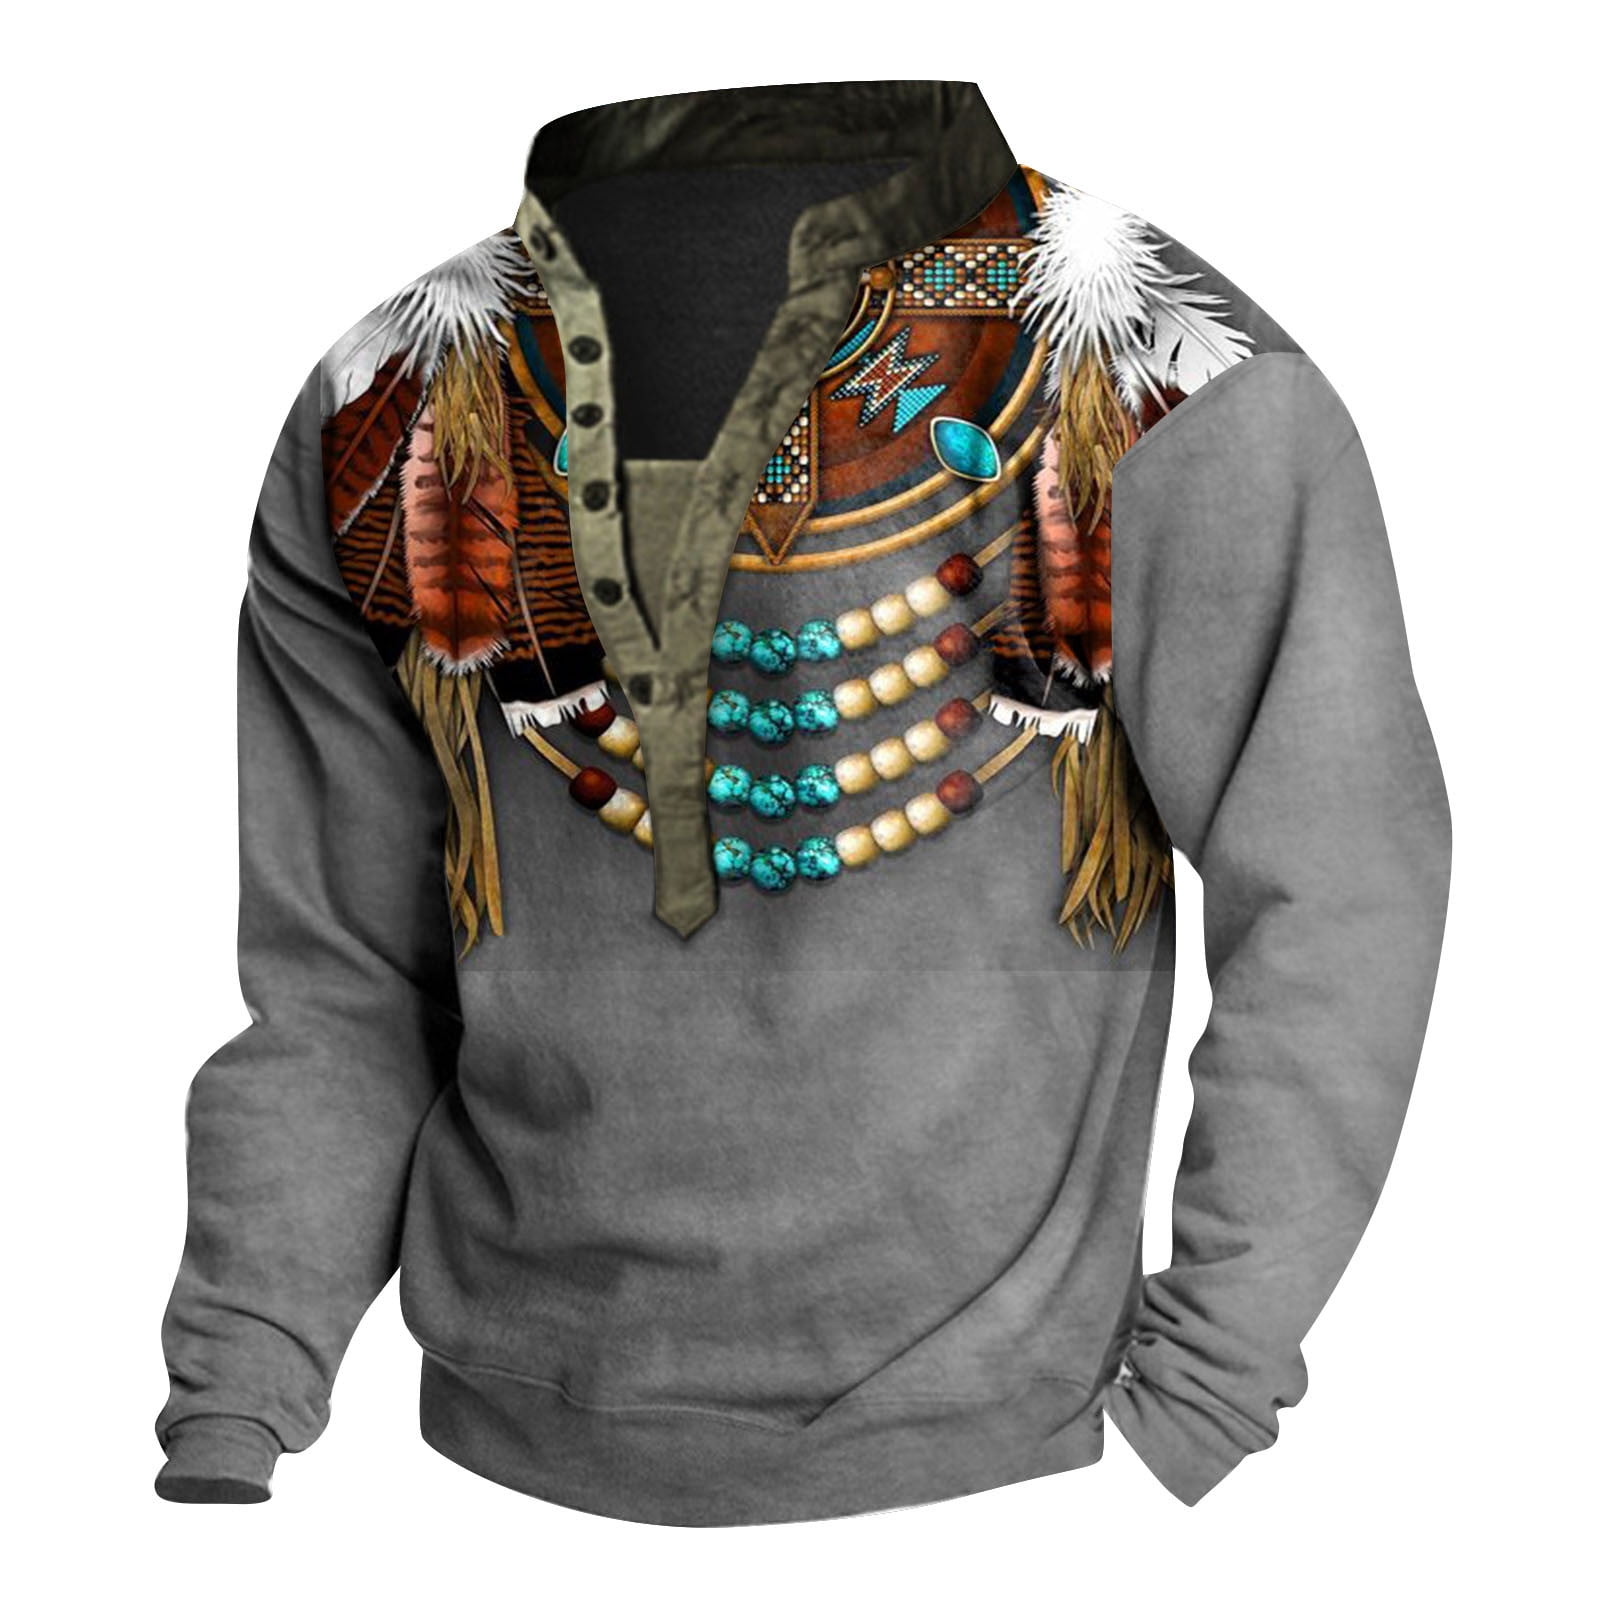 Mlqidk Men's Western Aztec Sweatshirts,Ethnic Print Graphic Sweater ...